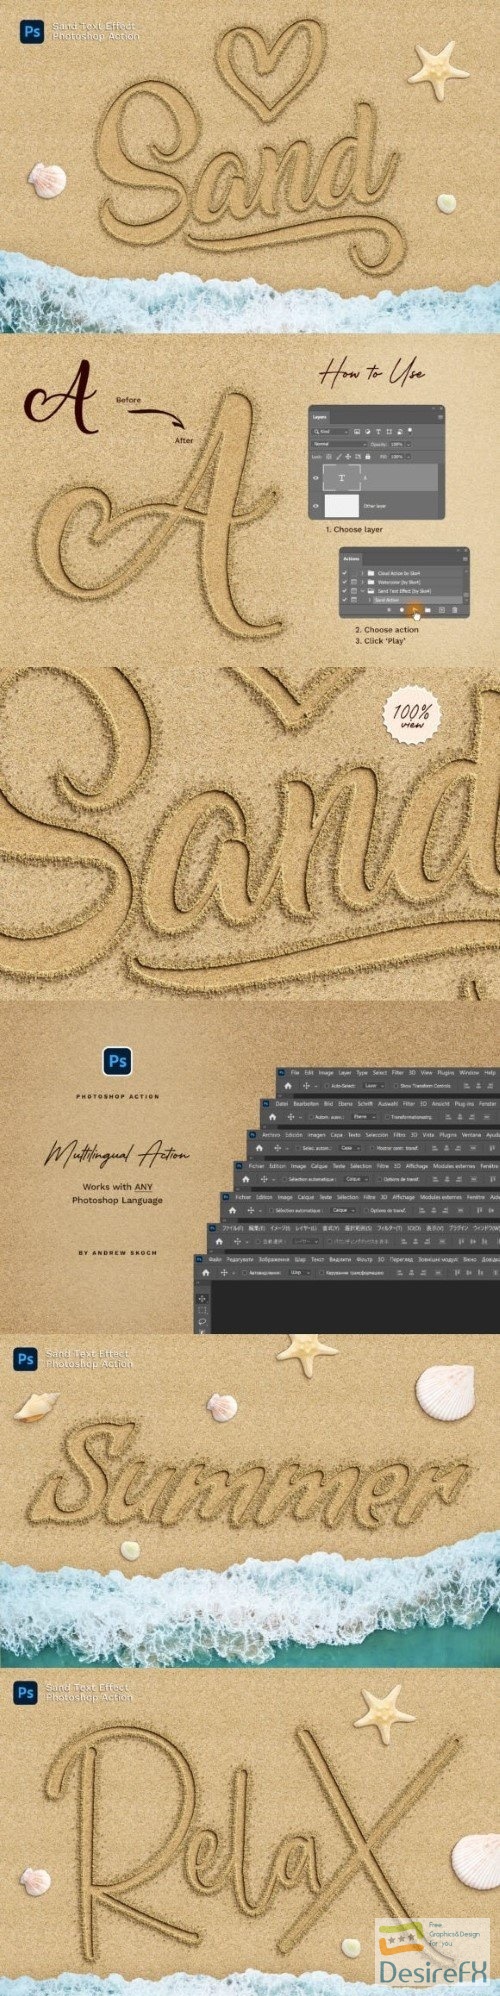 Sand Effect Photoshop Action - 91990065